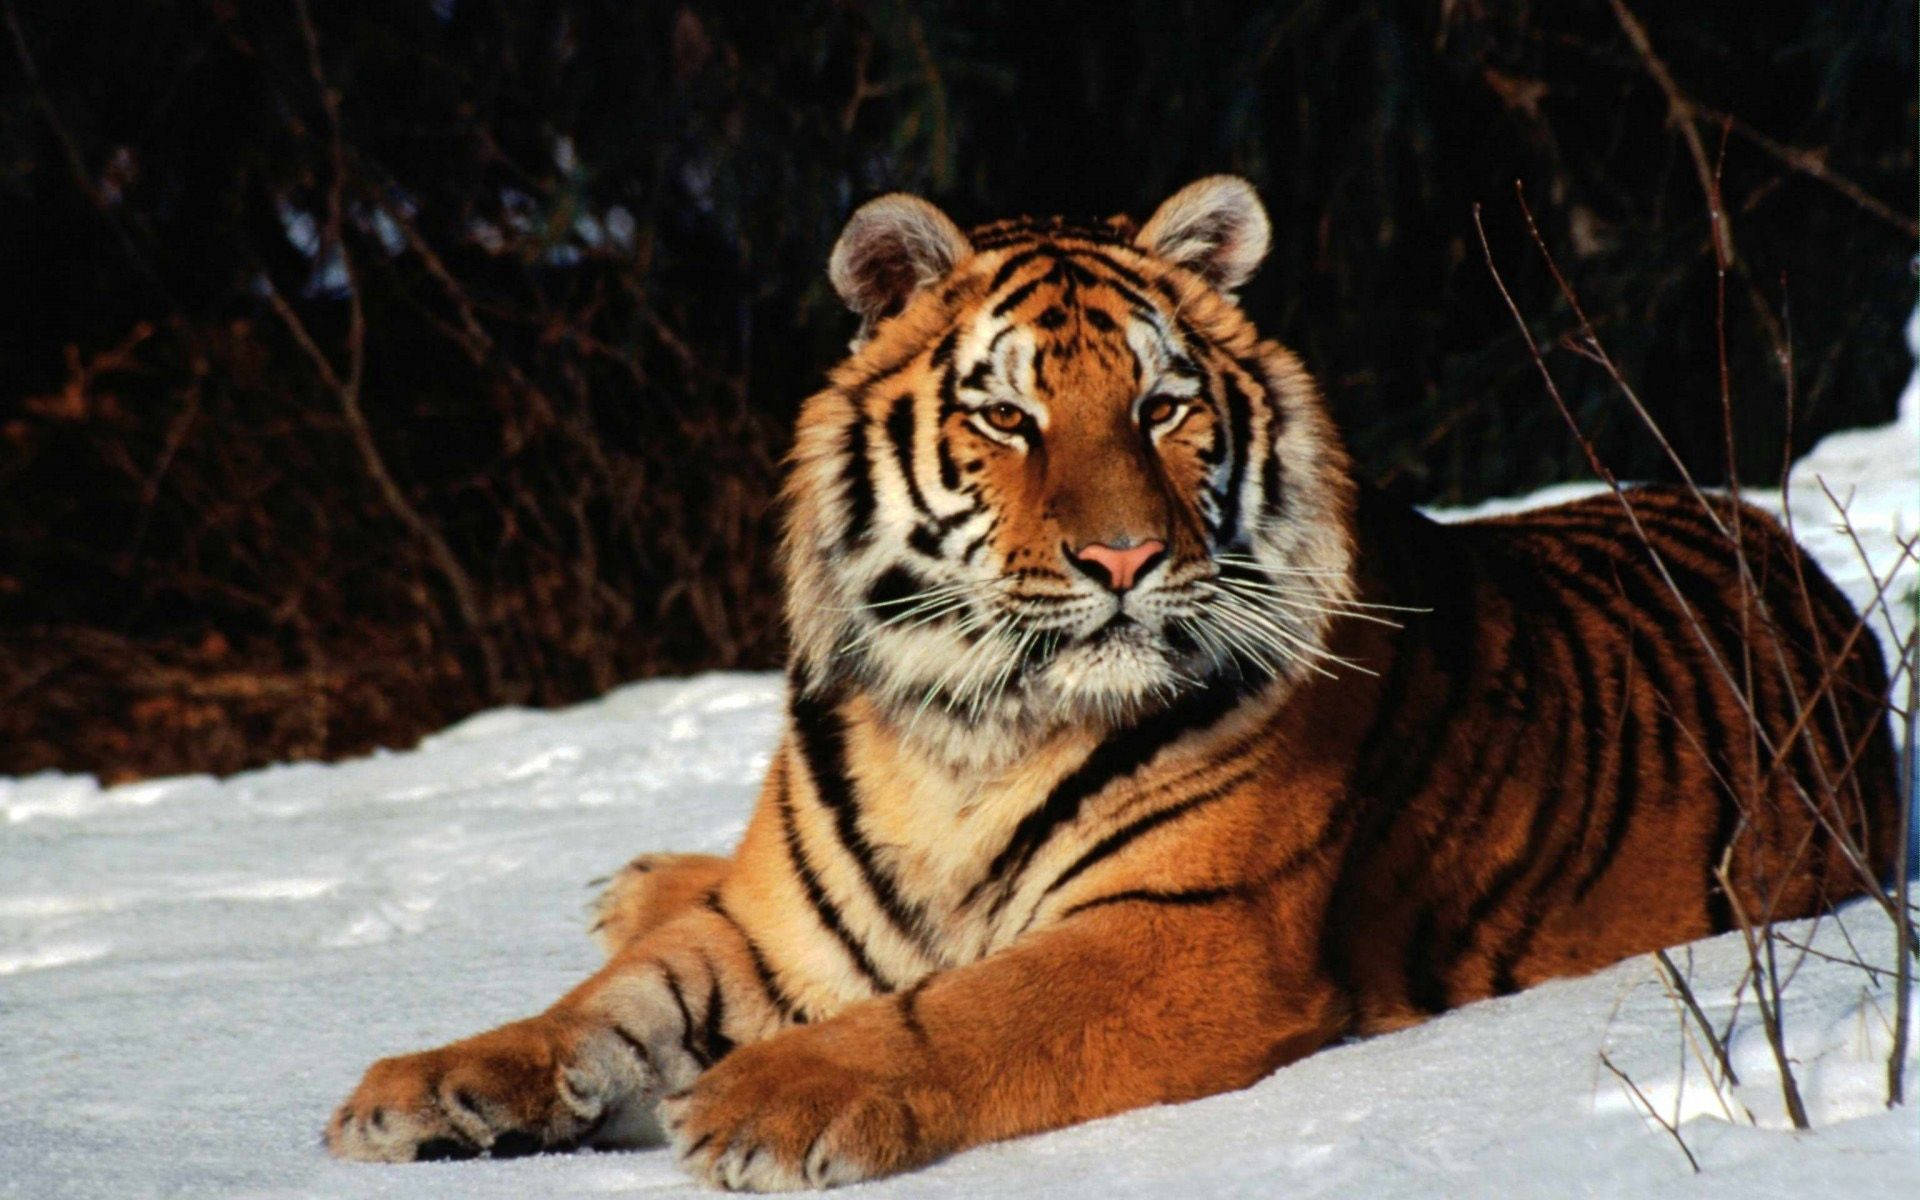 Tiger Sitting On Snow